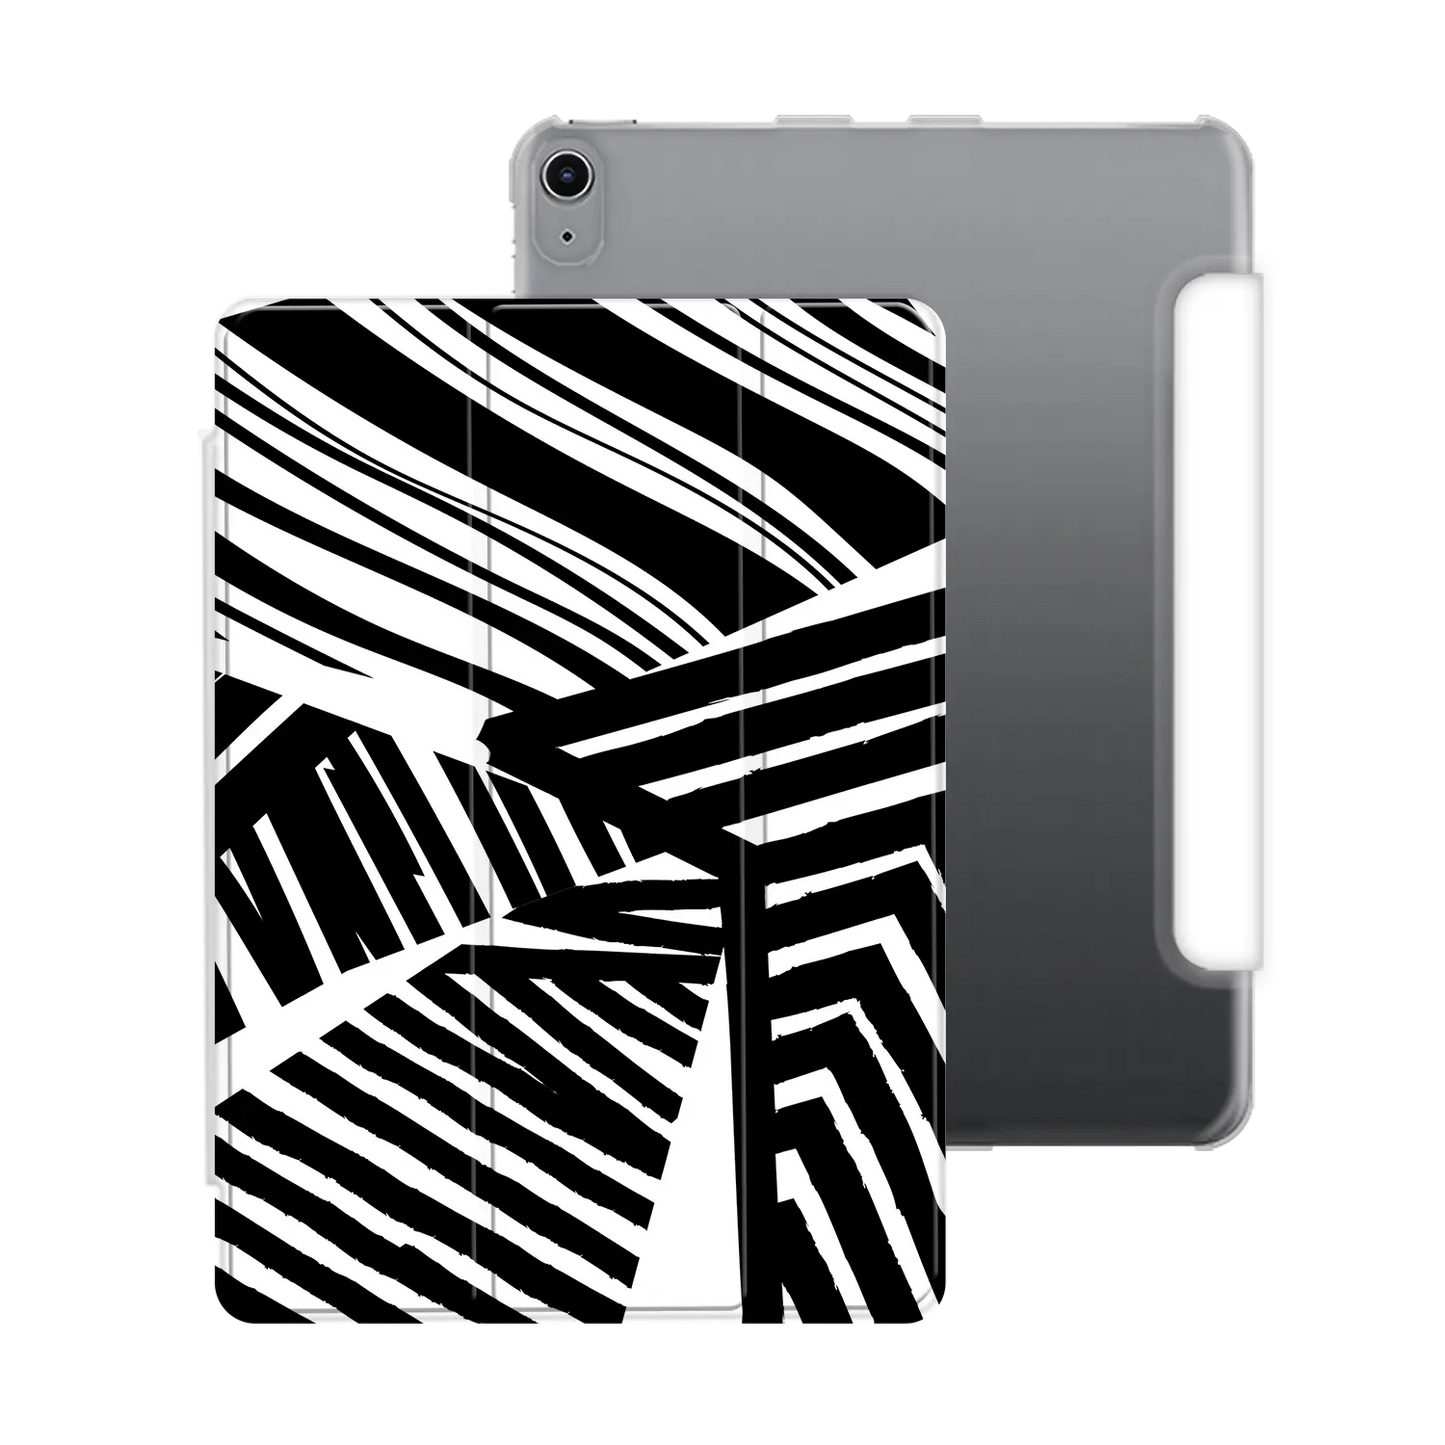 Rayas - iPad personalizado carcasa